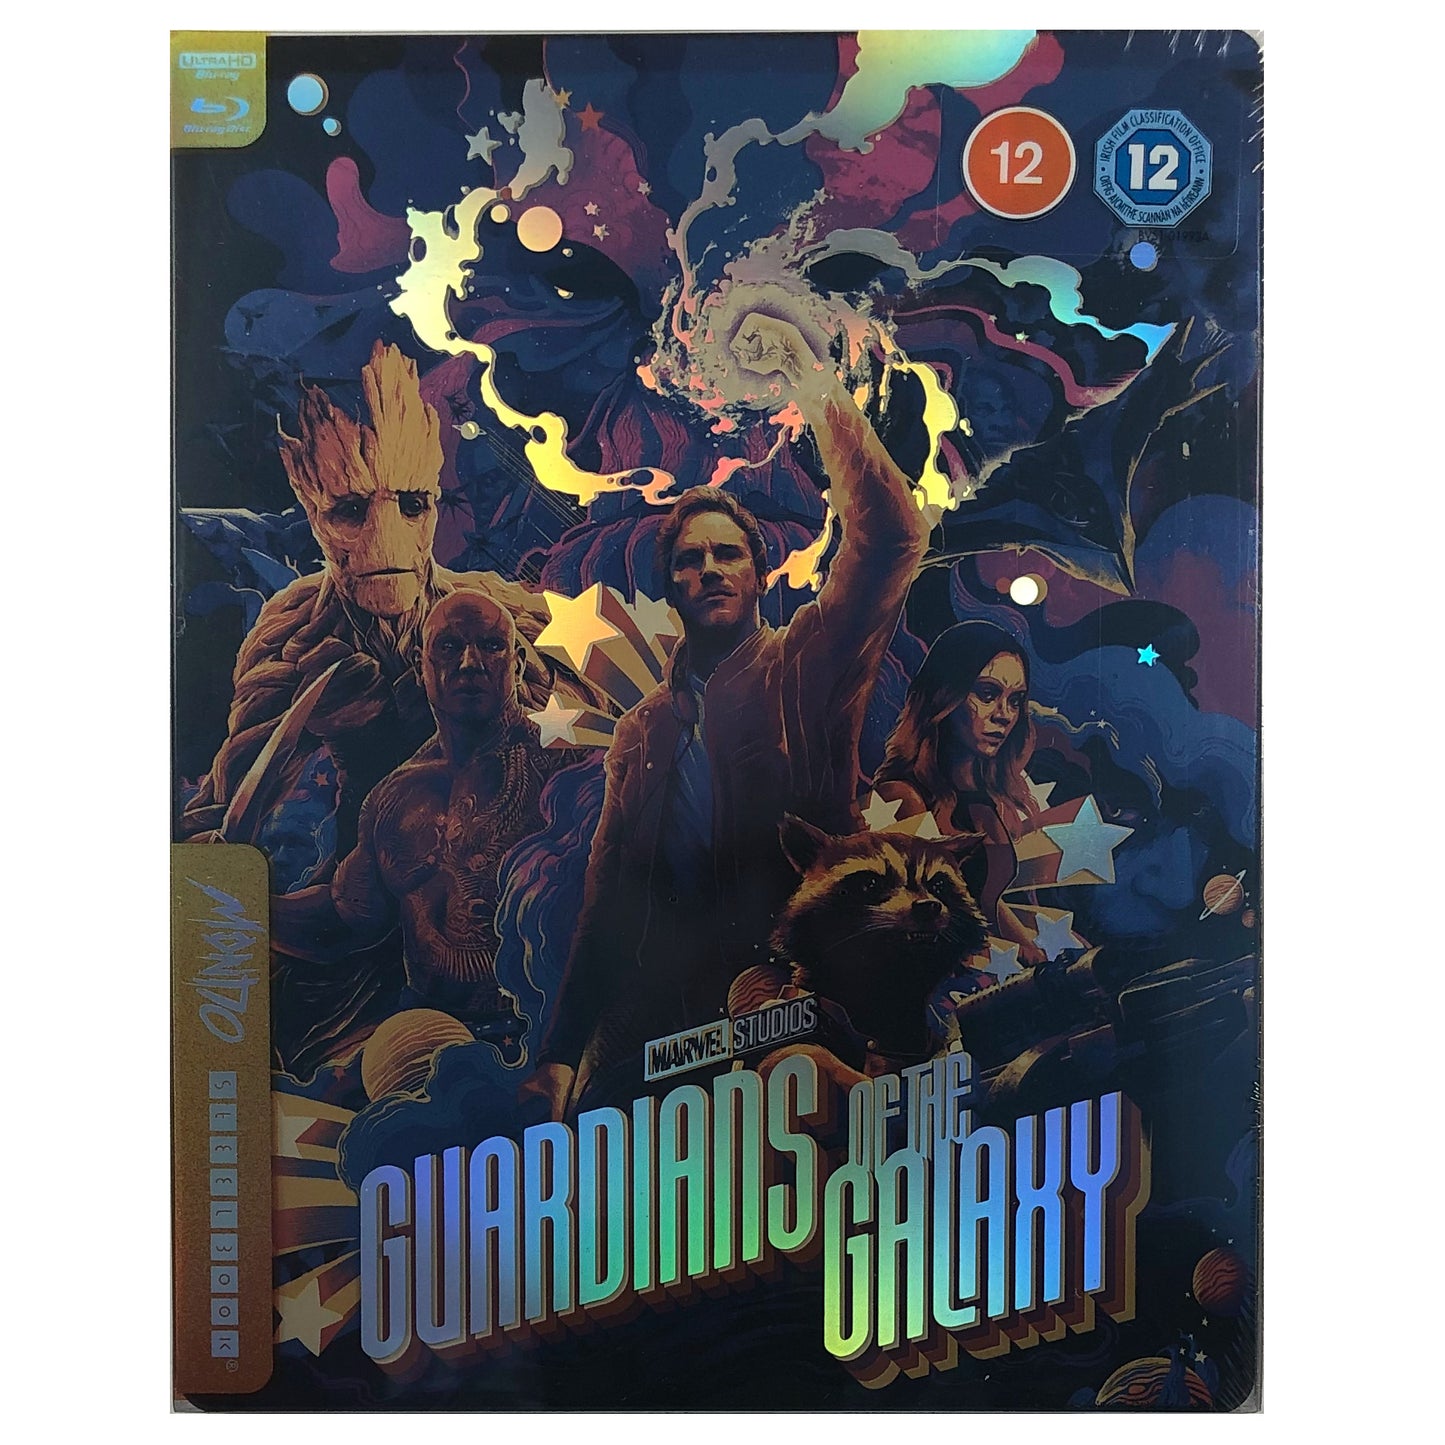 Guardians of the Galaxy Mondo 4K Steelbook